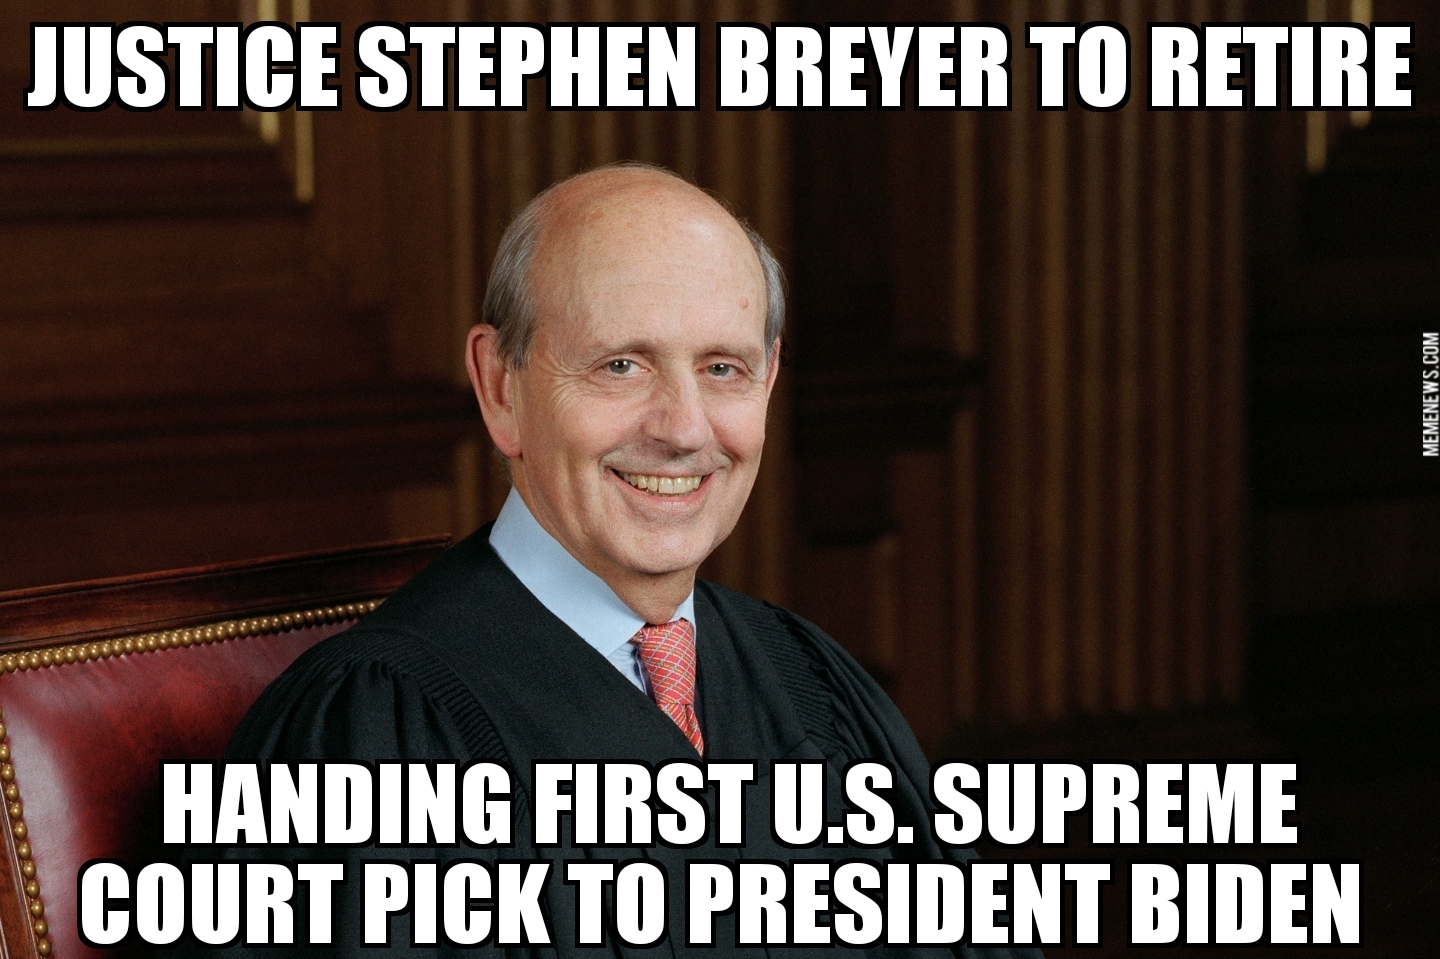 Stephen Breyer to retire